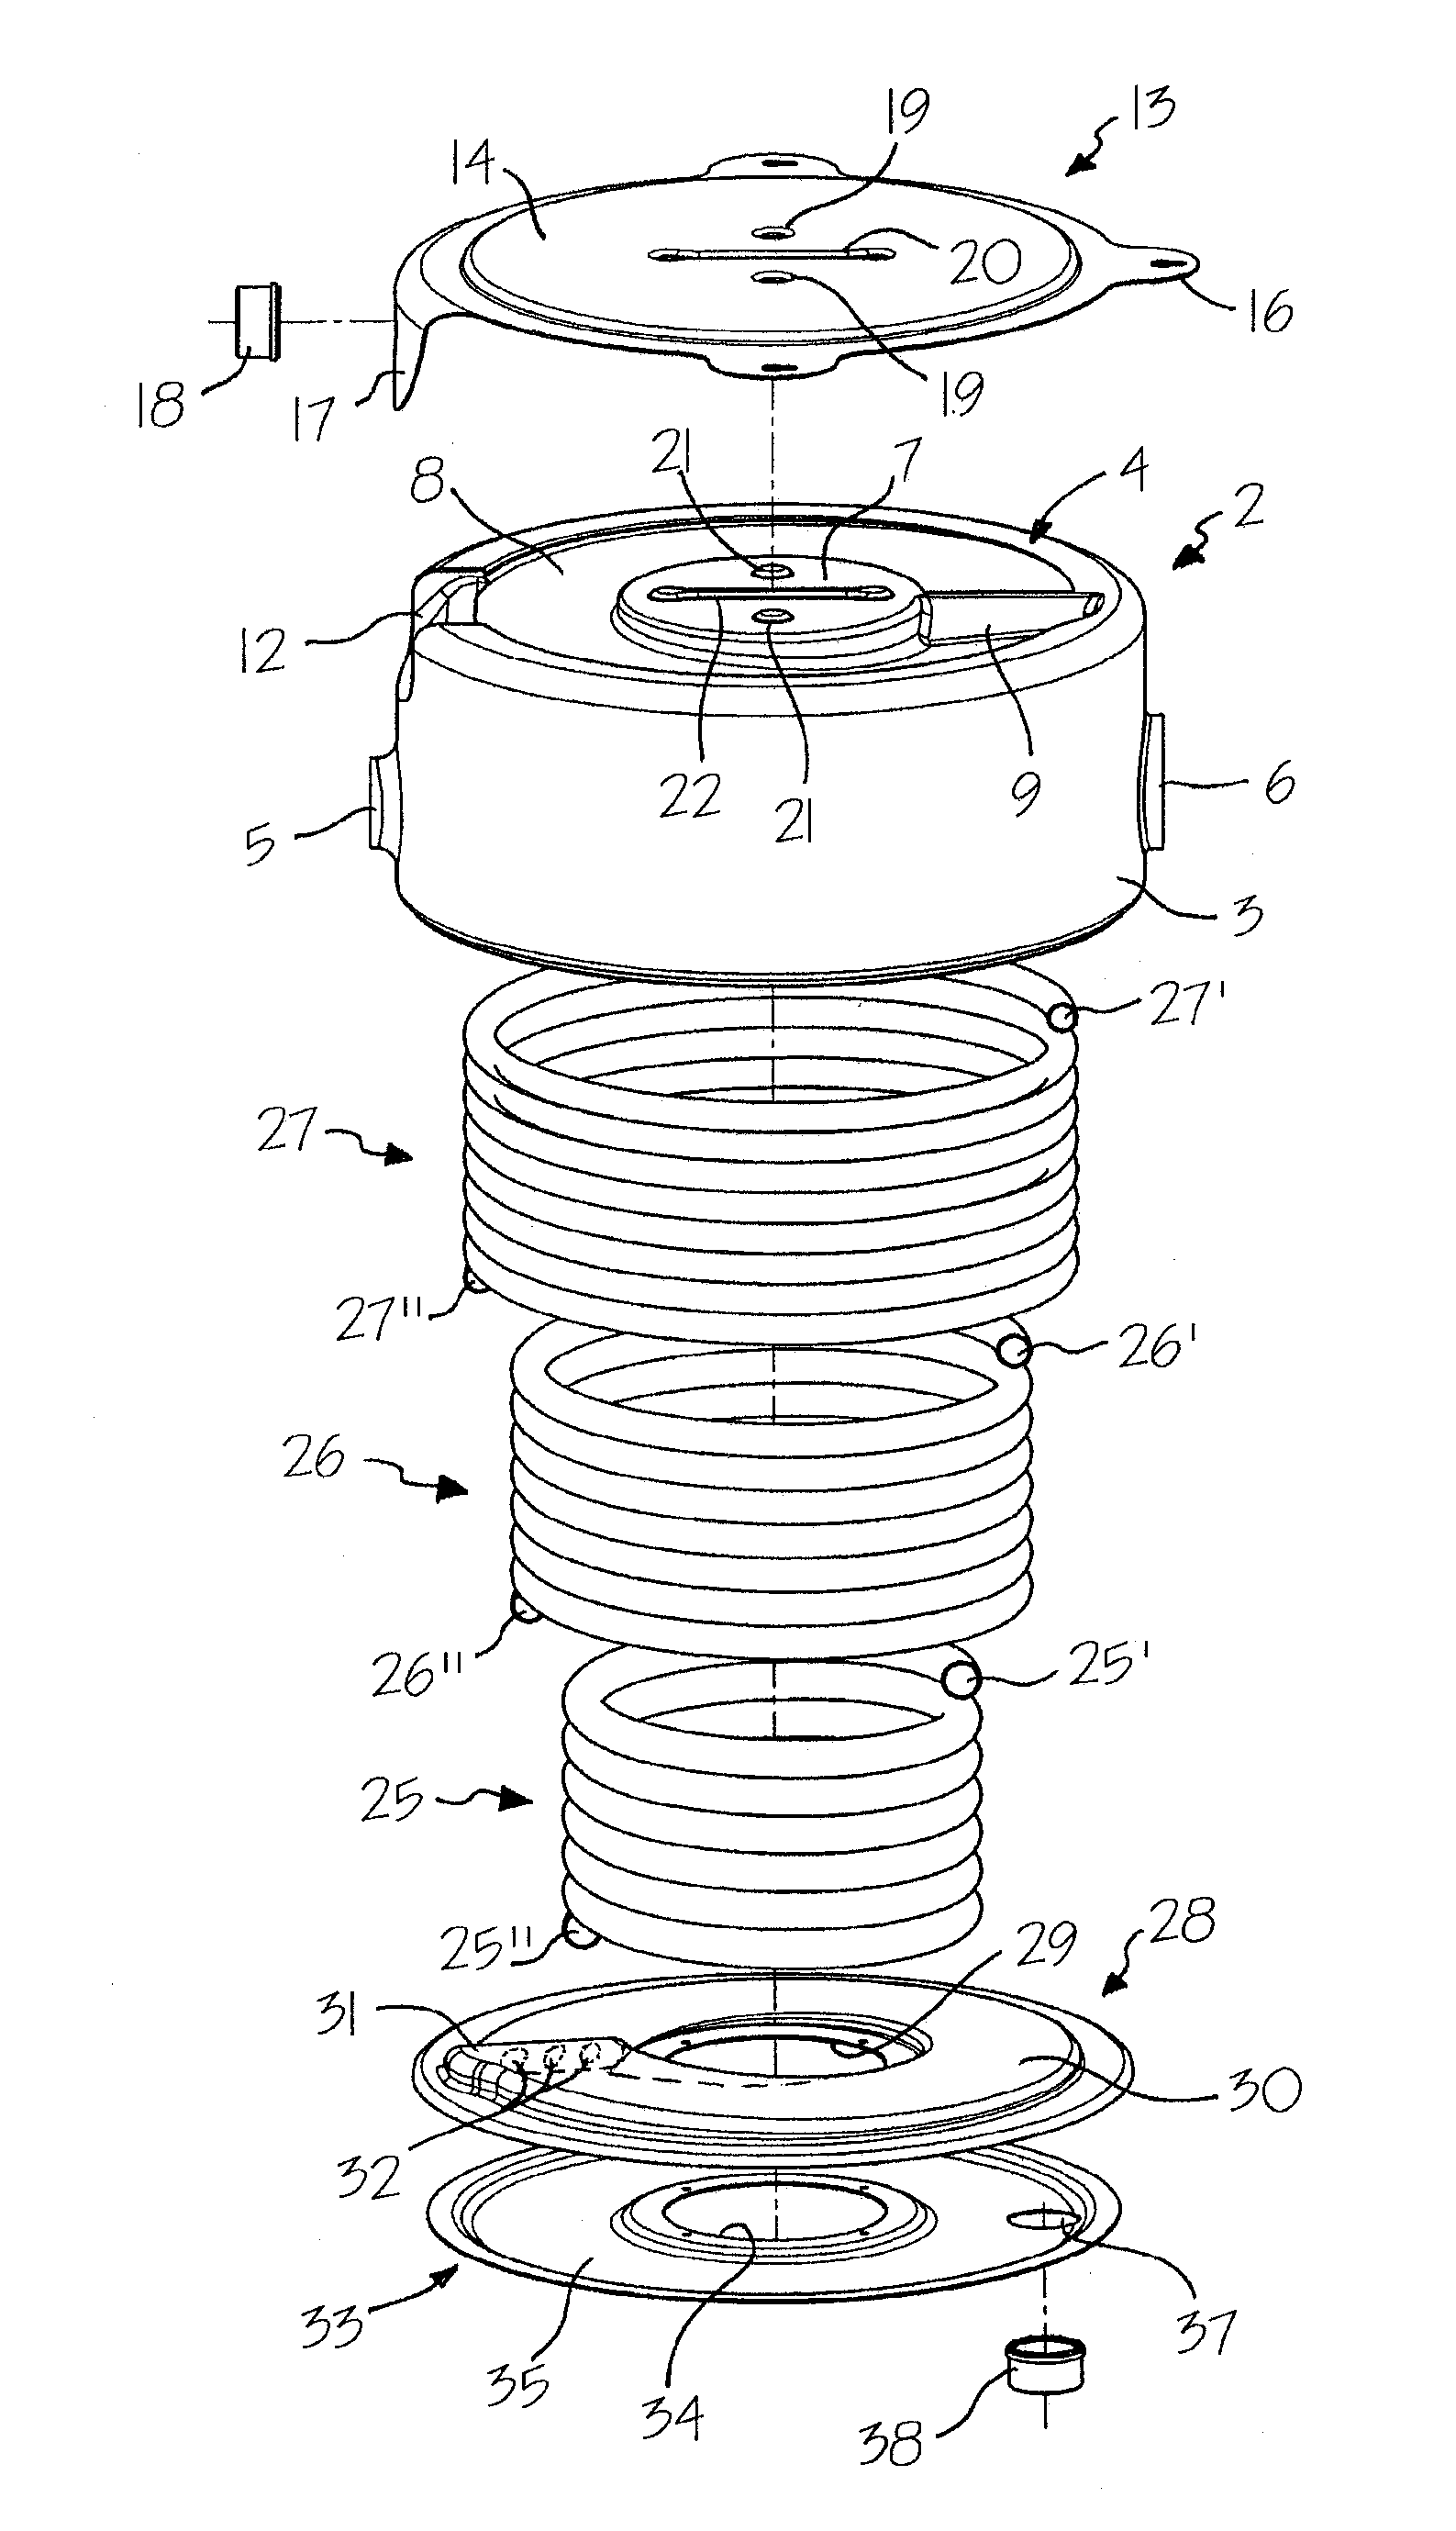 Heat exchanger, in particular of the condensation type